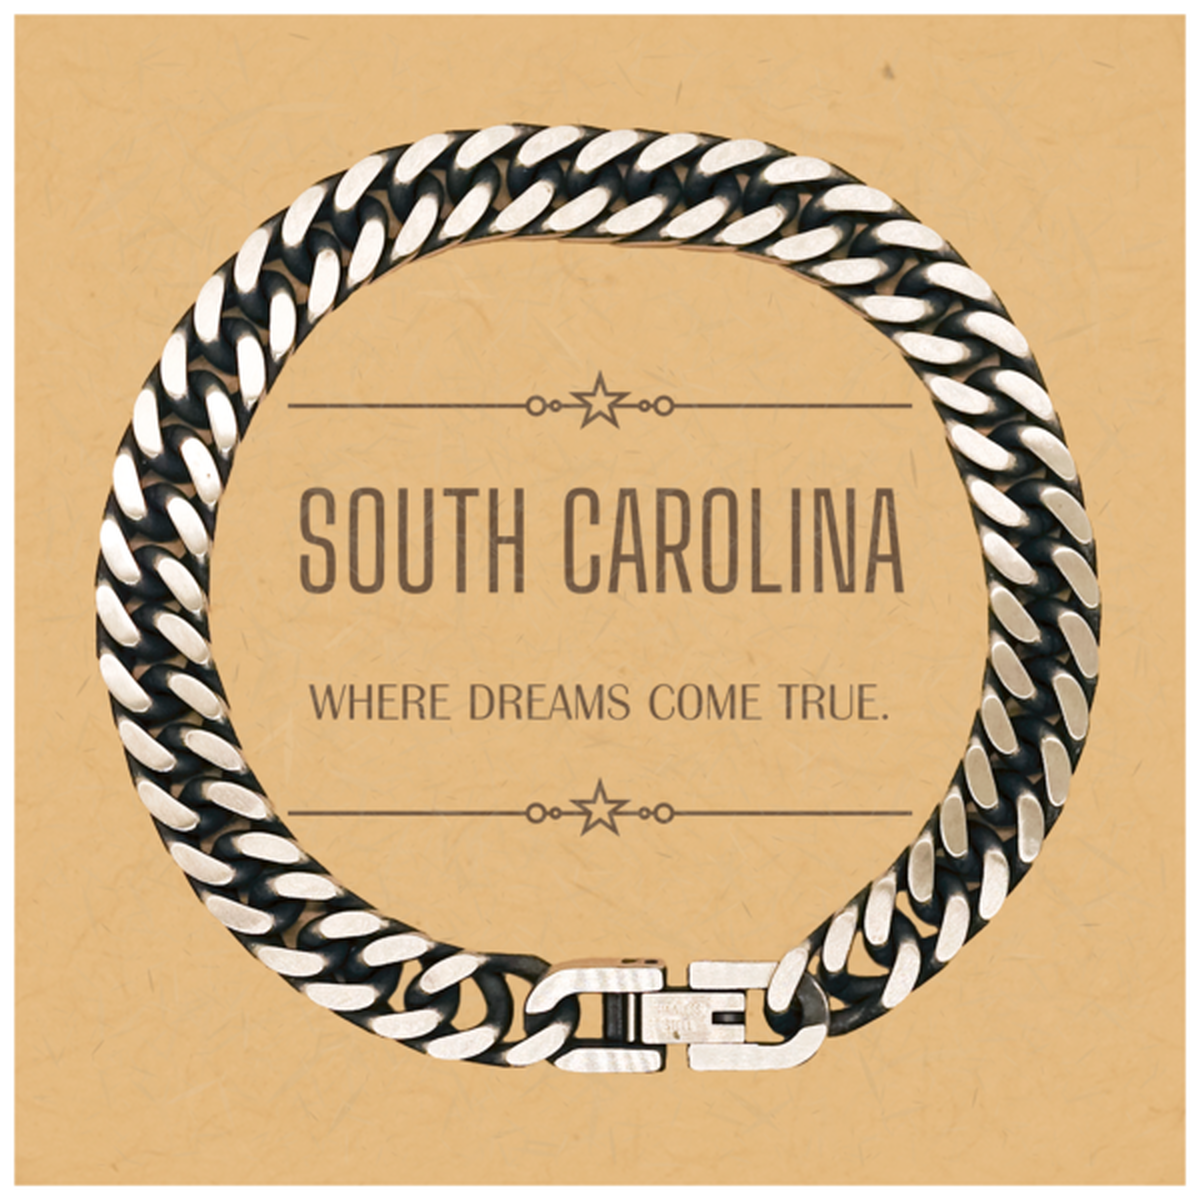 Love South Carolina State Cuban Link Chain Bracelet, South Carolina Where dreams come true, Birthday Christmas Inspirational Gifts For South Carolina Men, Women, Friends